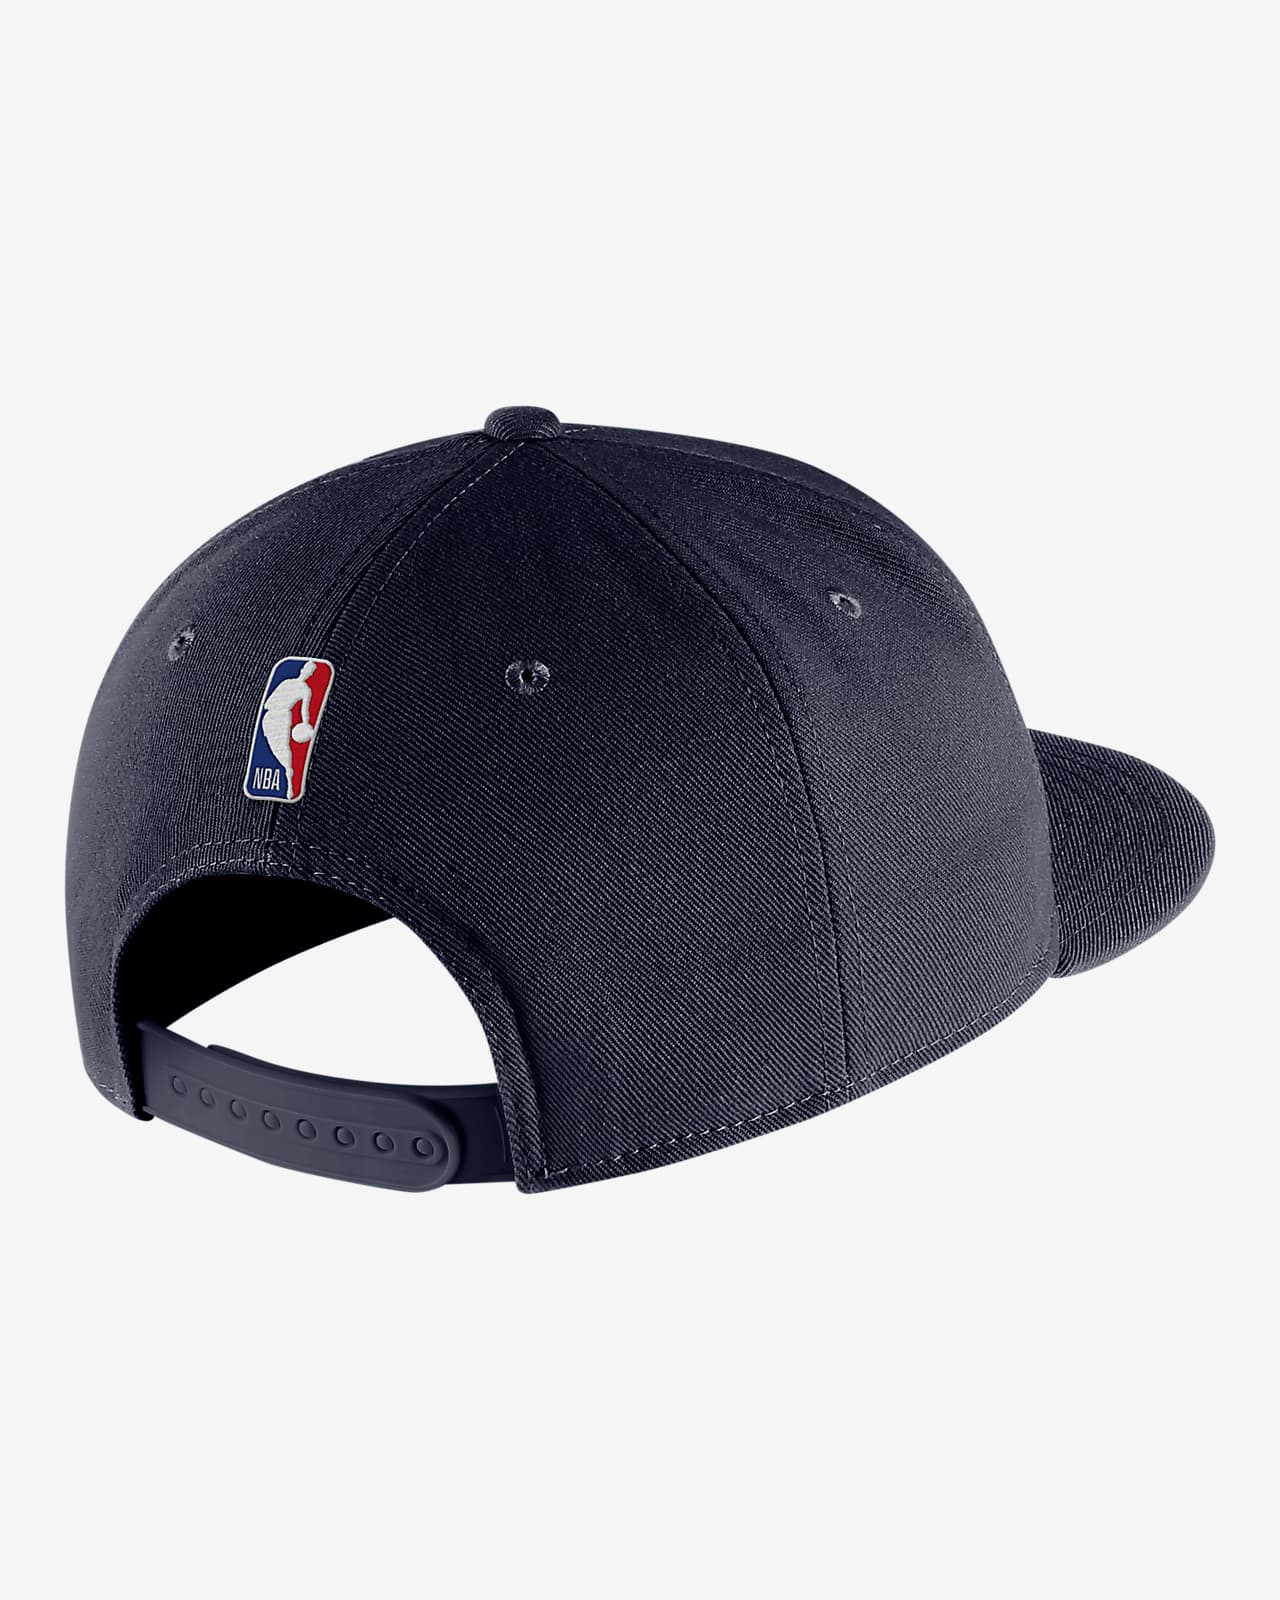 Indiana Pacers City Edition Nike NBA Snapback Hat. Nike.com